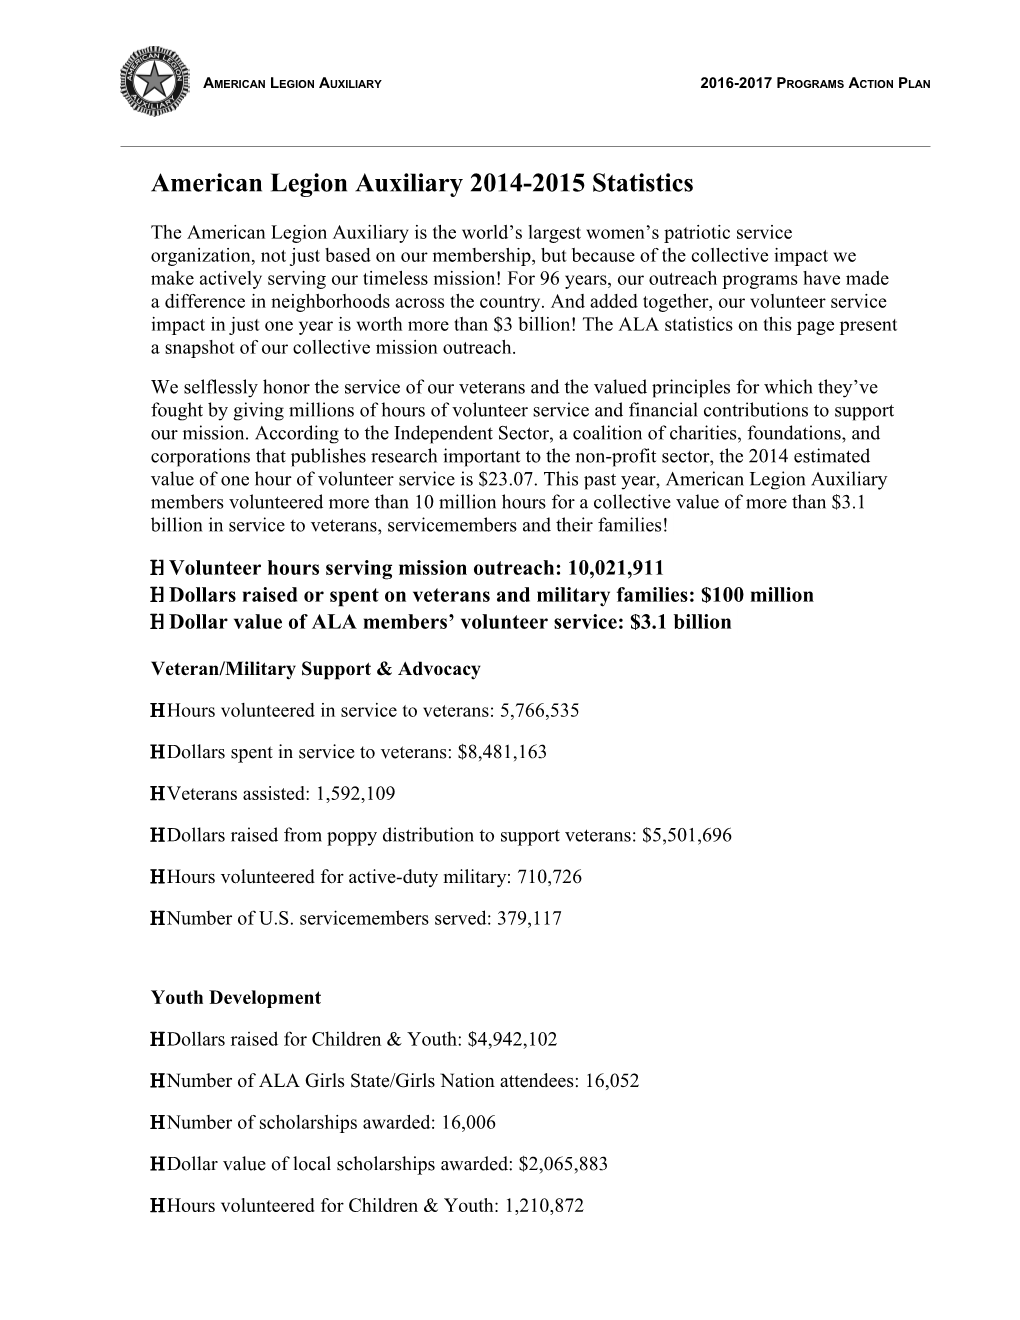 American Legion Auxiliary 2014-2015 Statistics